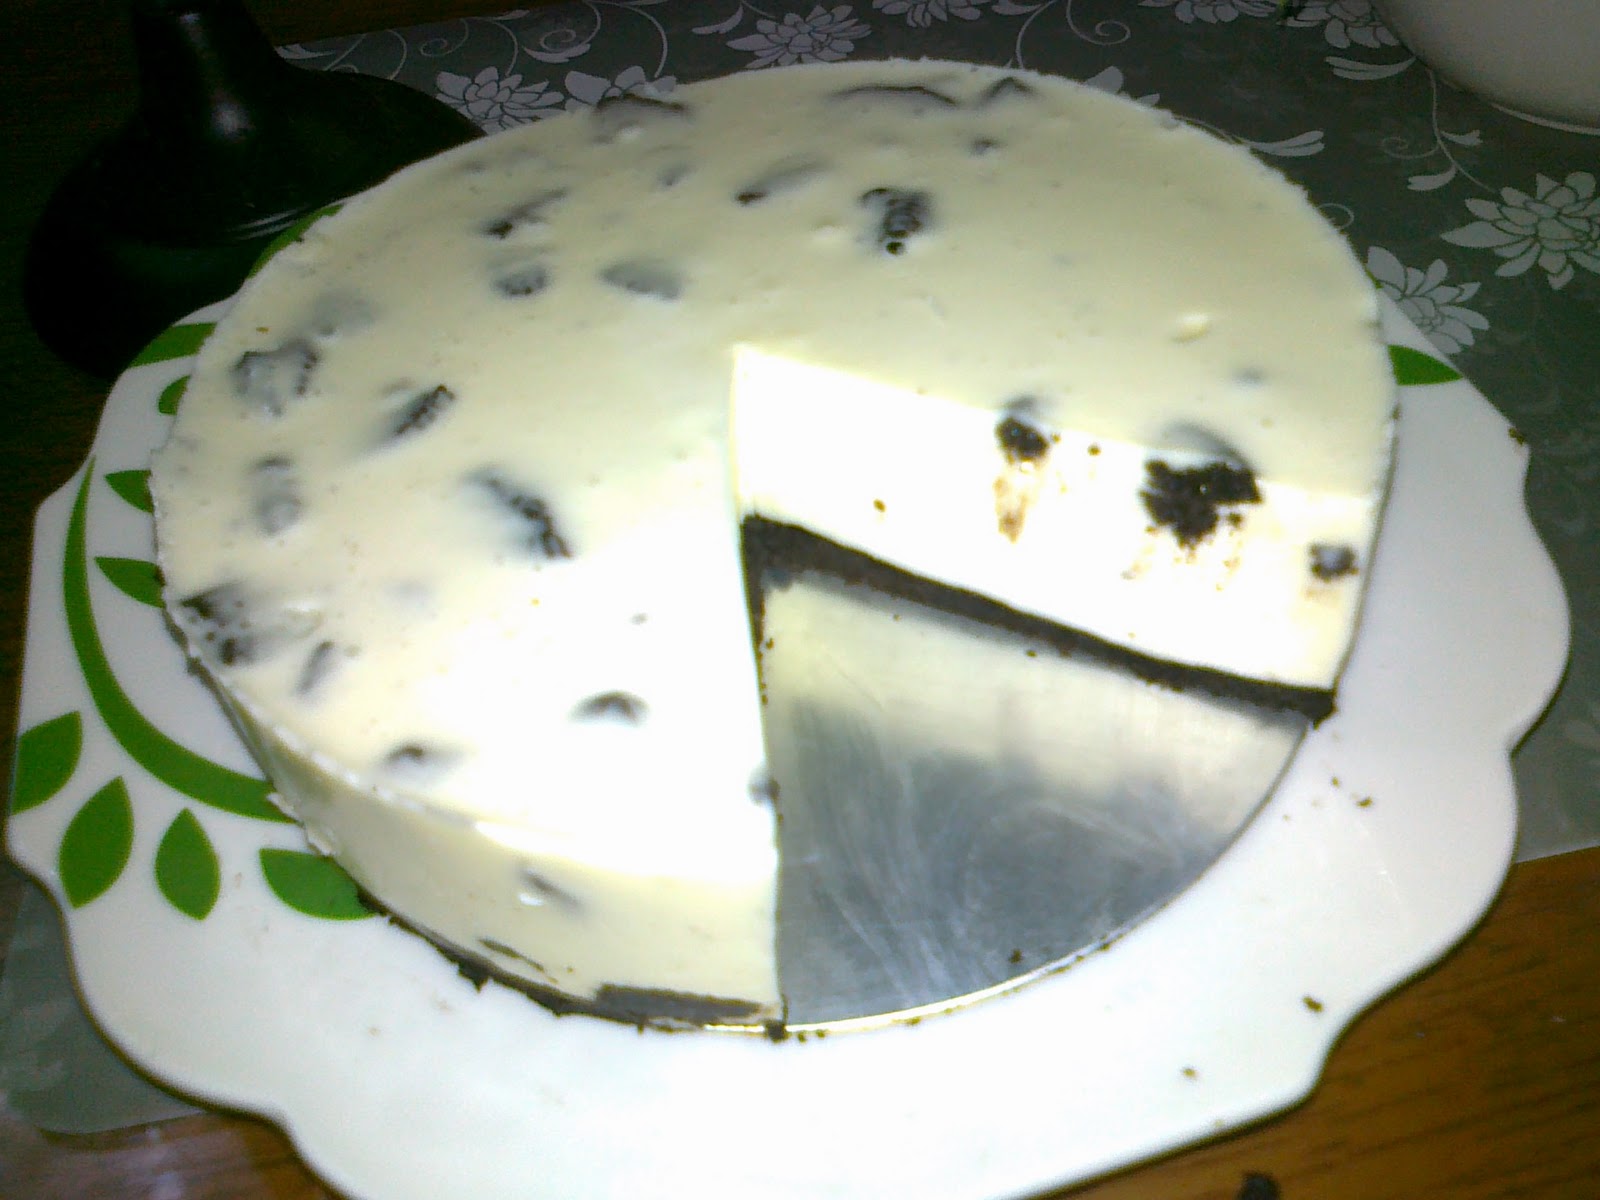 Made by Ita: Chilled Oreo Cheese Cake